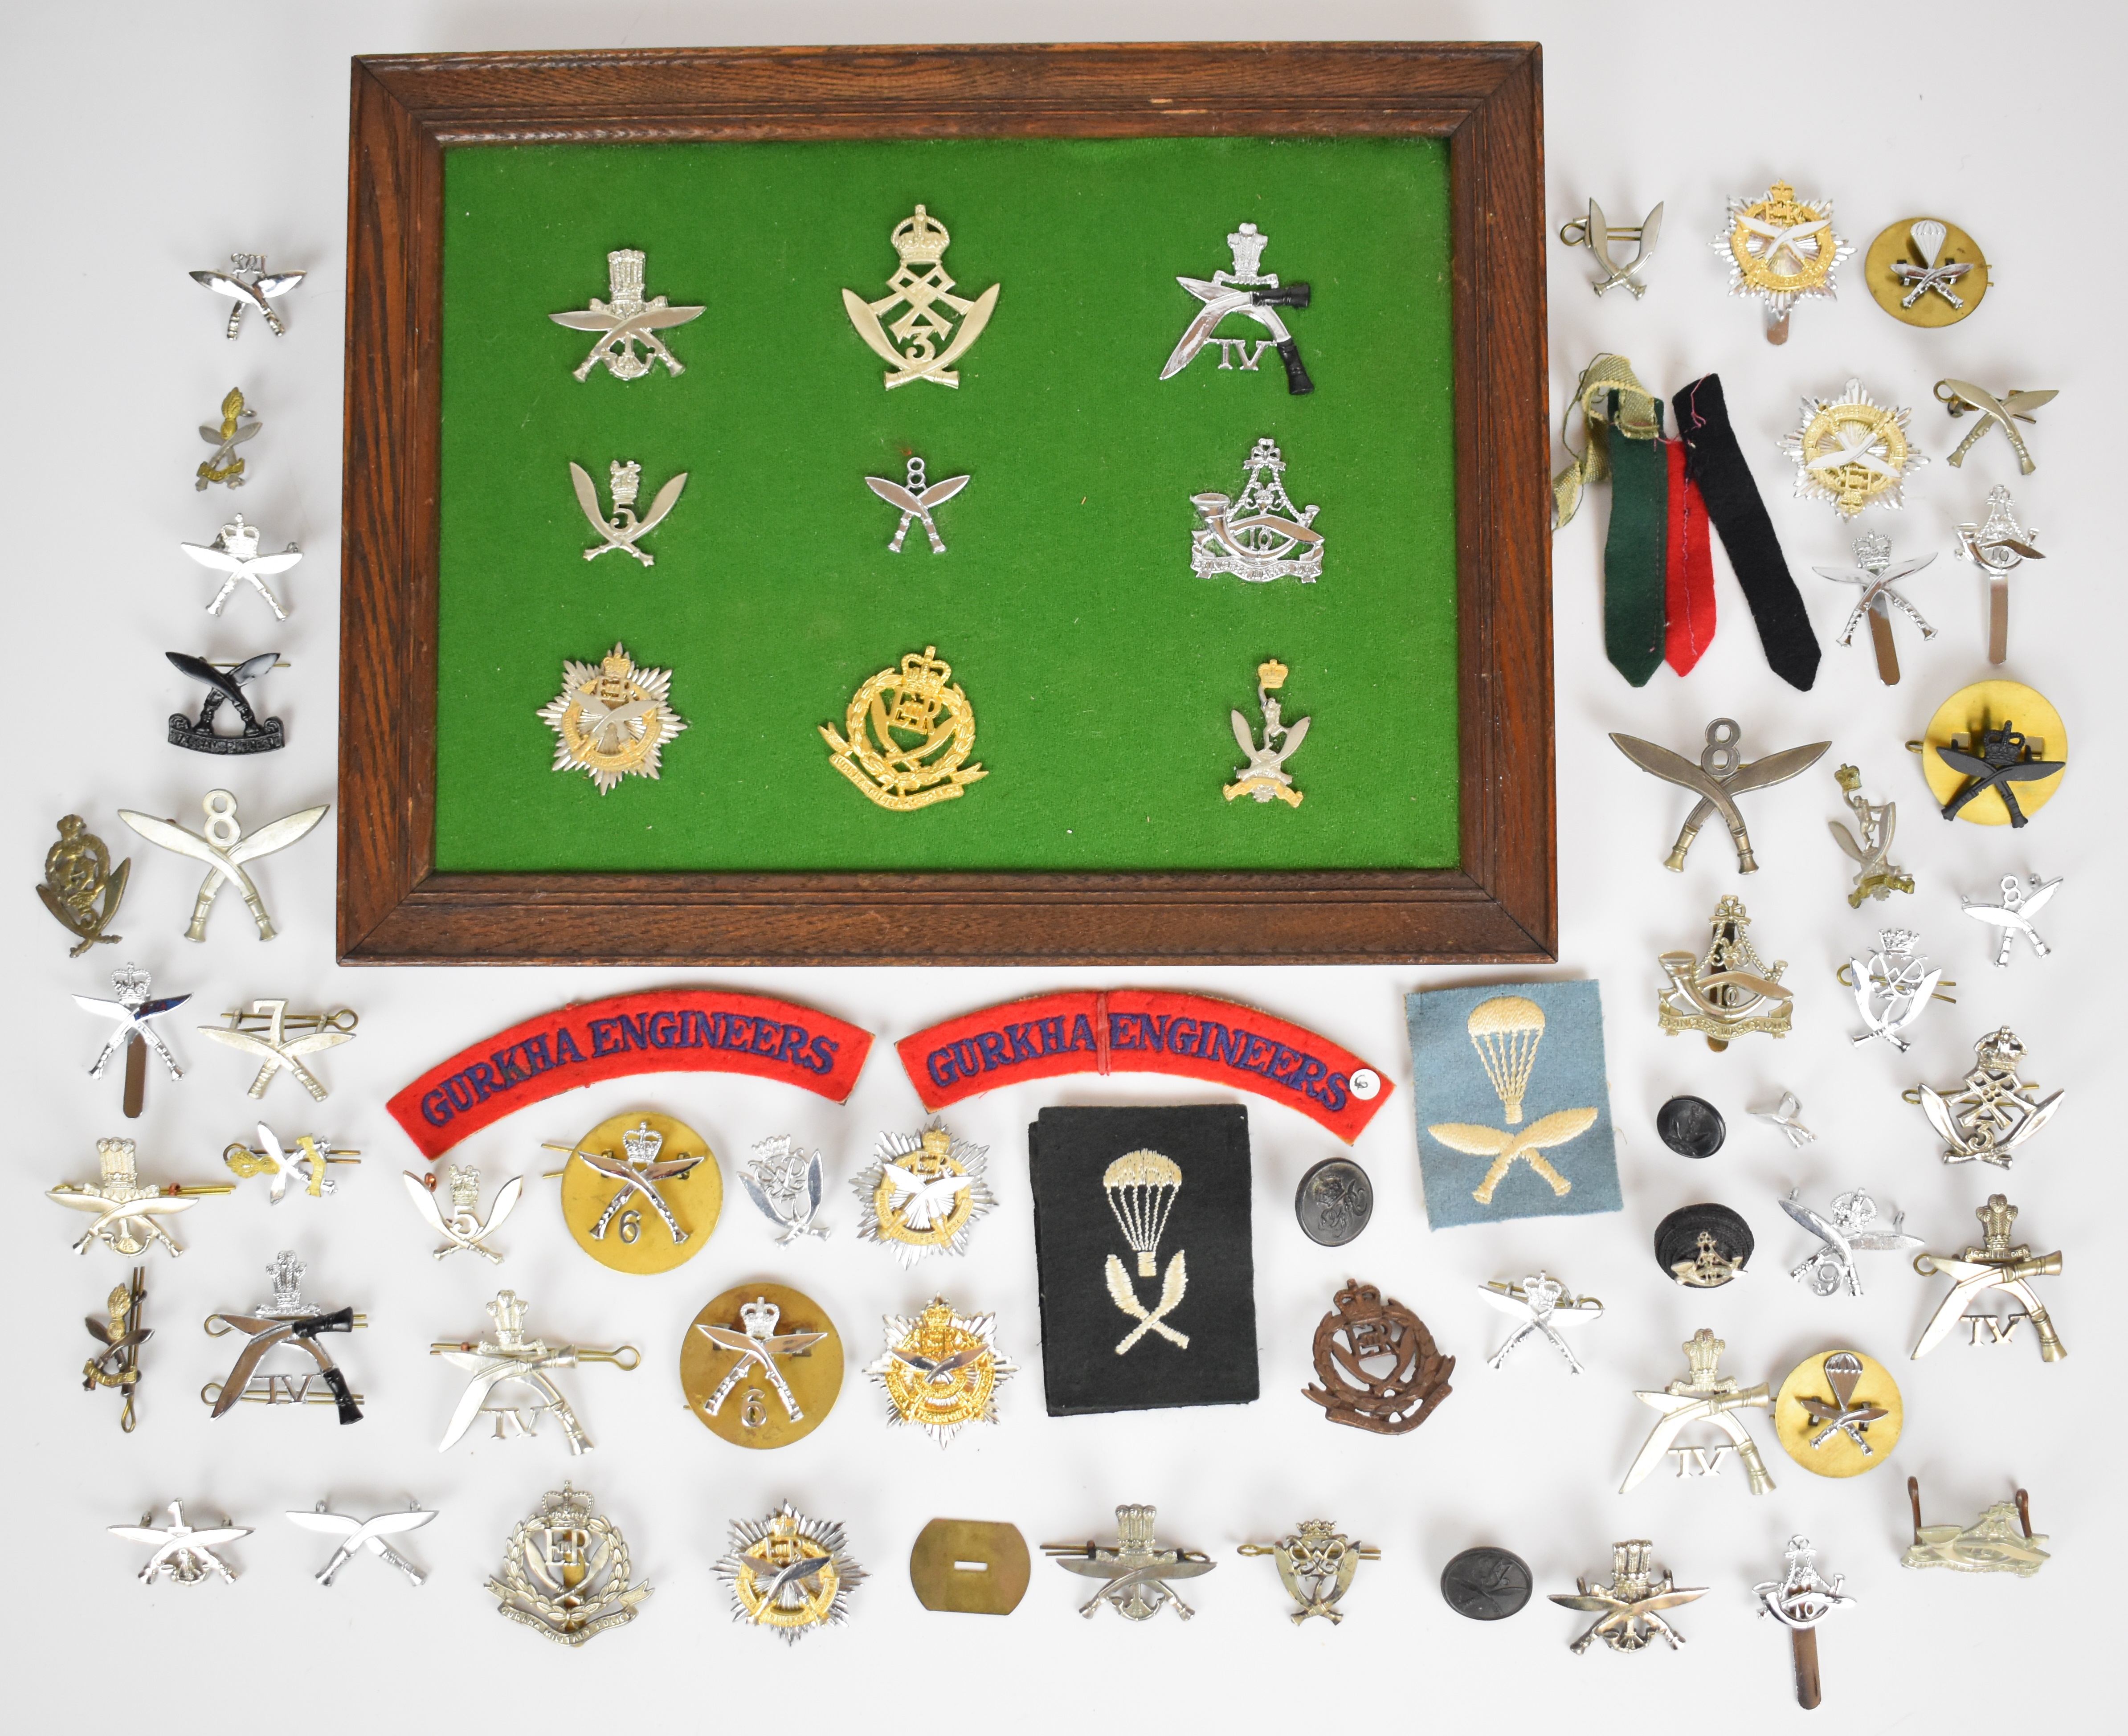 Collection of approximately 50 British Army Gurkha Regiment badges including Transport Regiment,